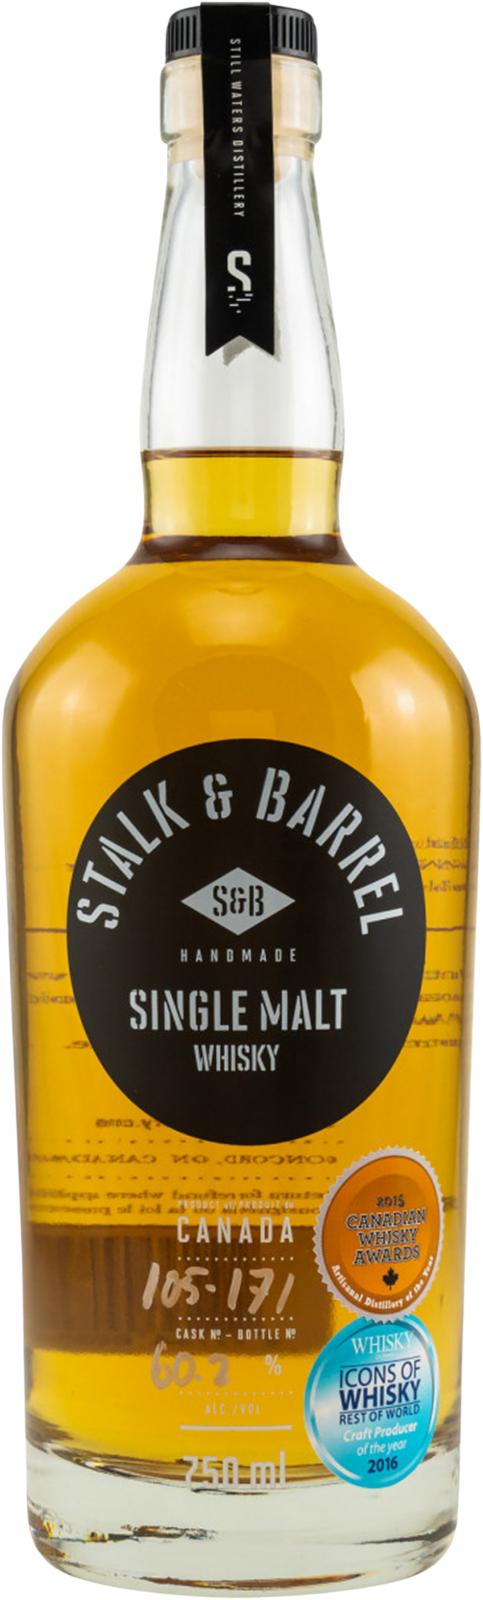 Stalk & Barrel Single Malt Whisky #105 60.2% 750ml